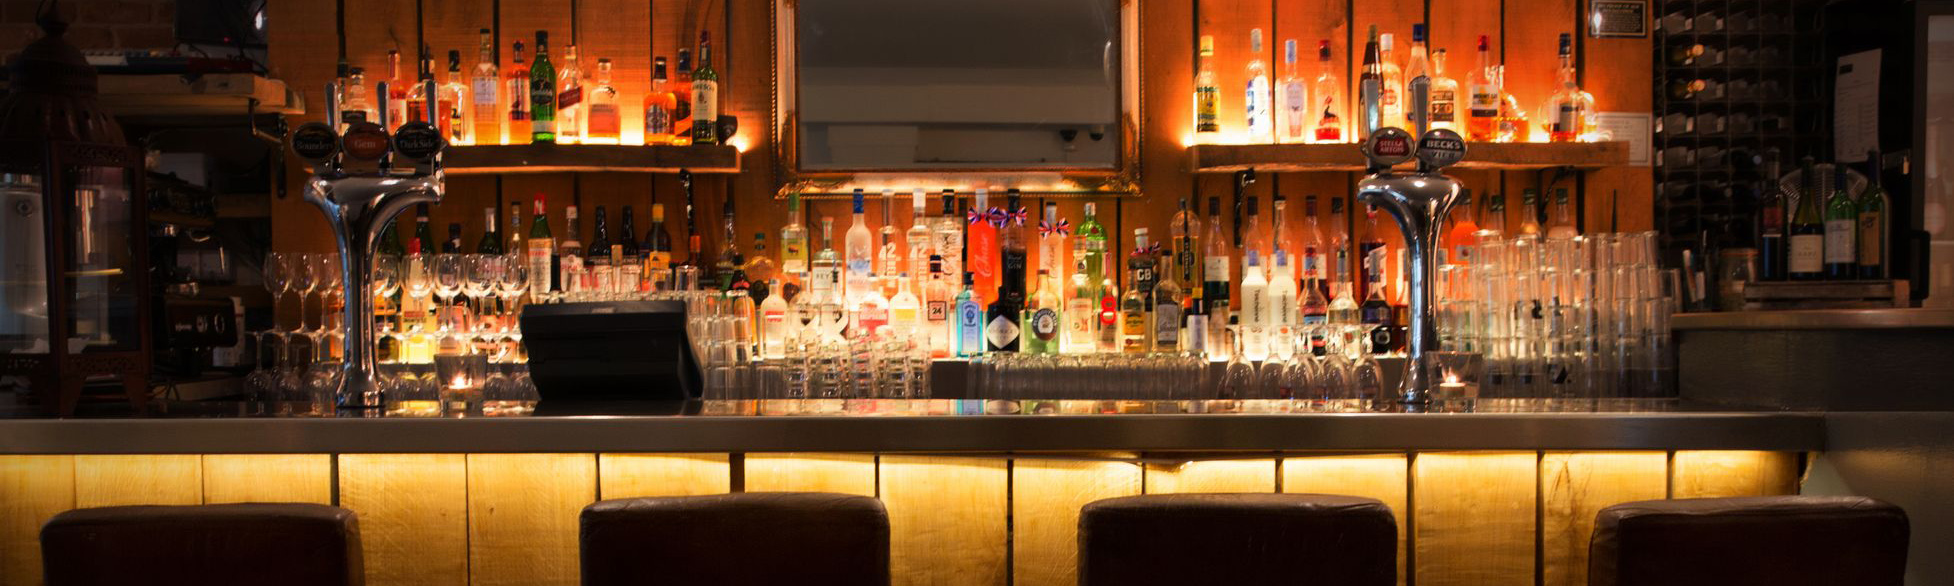 square-club-cocktail-bar-bristol